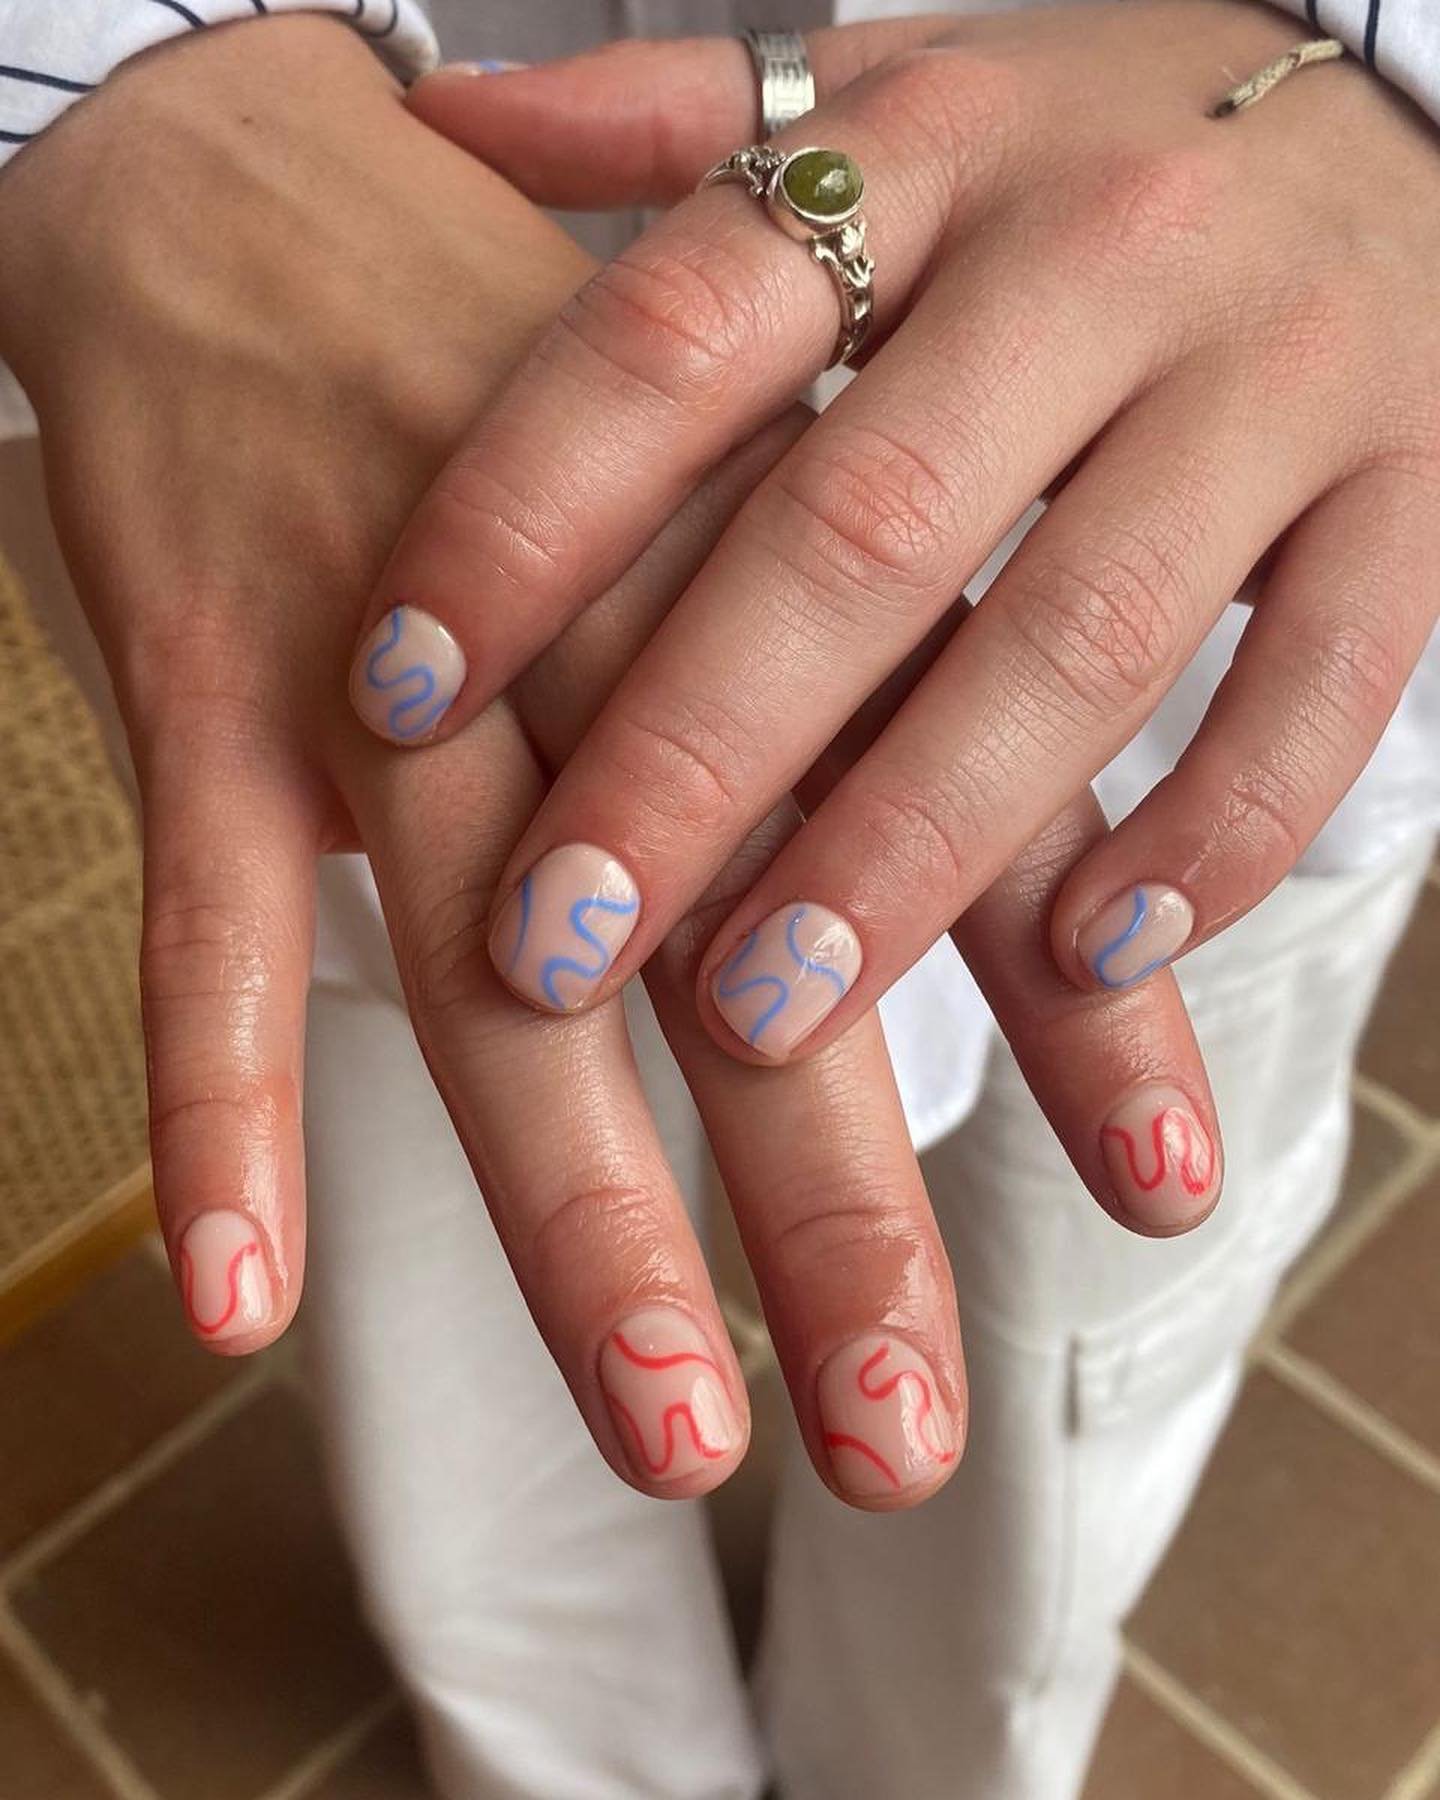 When your favorite Pinterest Inspiration becomes reality ✨ 

BIAB manicure with red &amp; blue nail art 💅🏼

#rosiesnailbar #balisalon #canggu #echobeach #biab #nailinsipration #manicure #bali